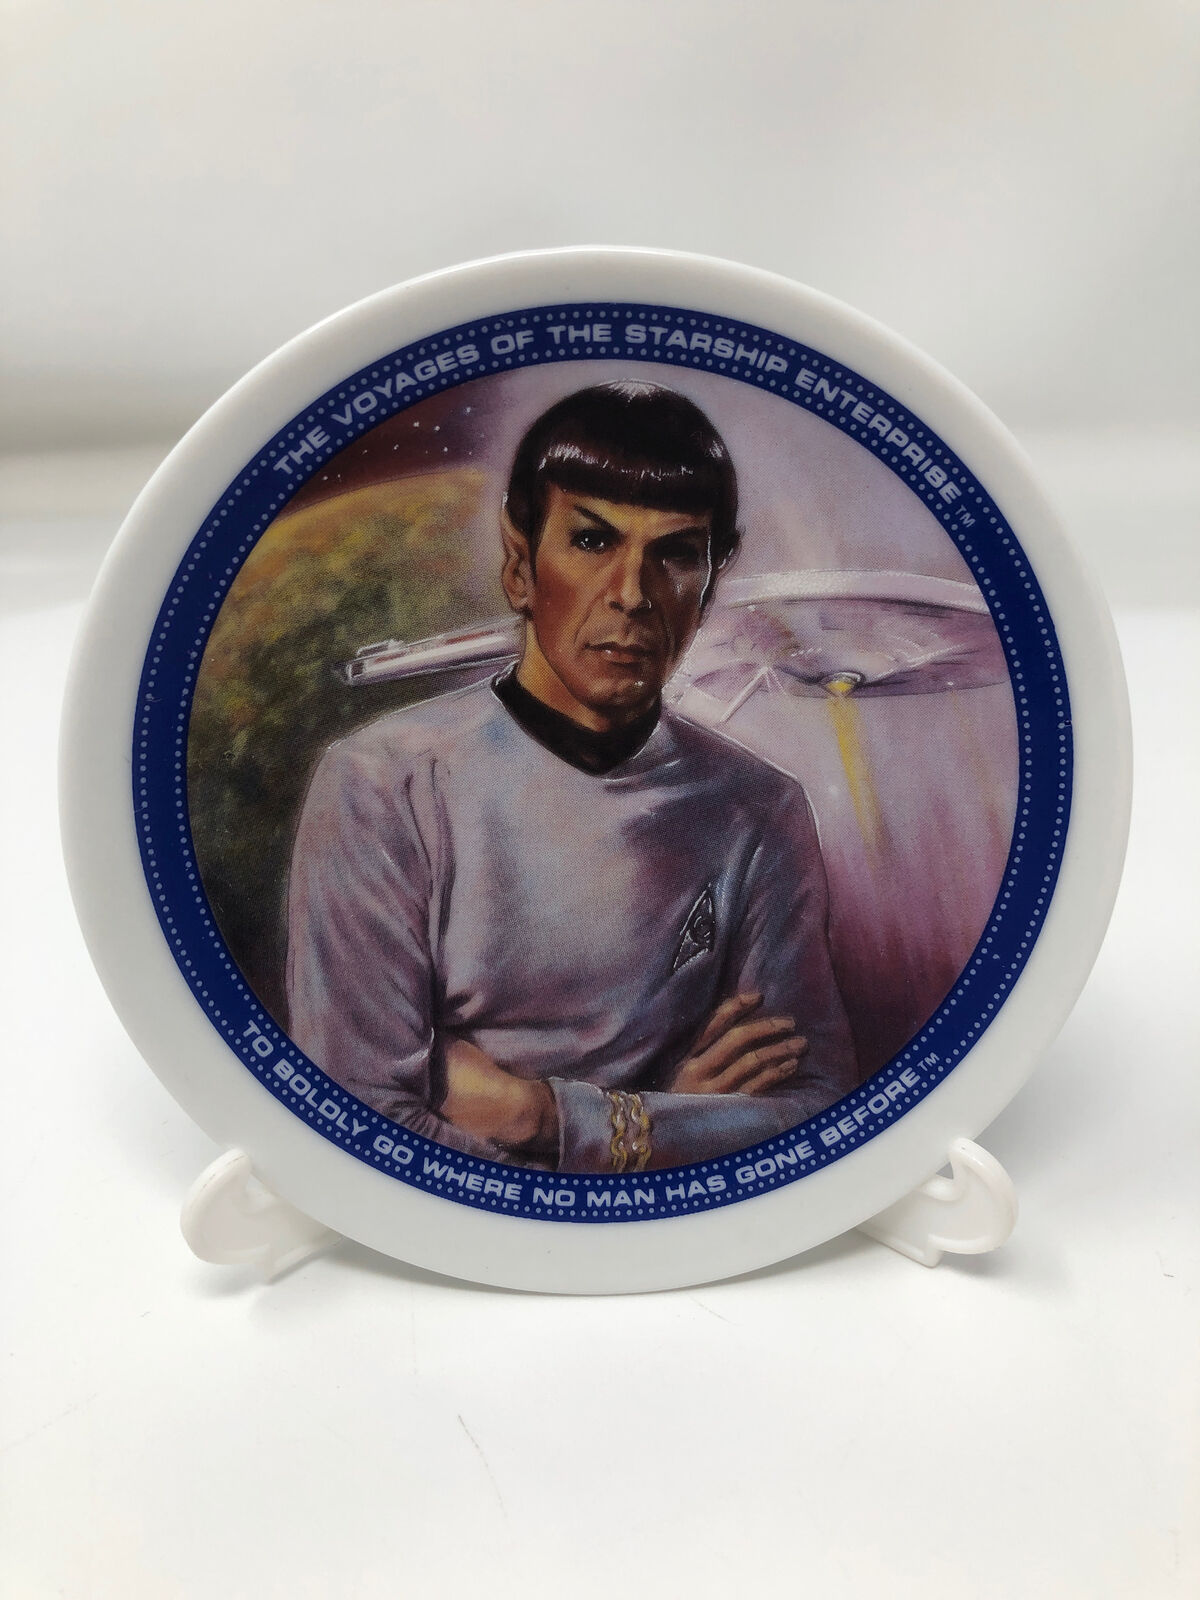 1991 Hamilton Gifts Star Trek Spock Mini Plate